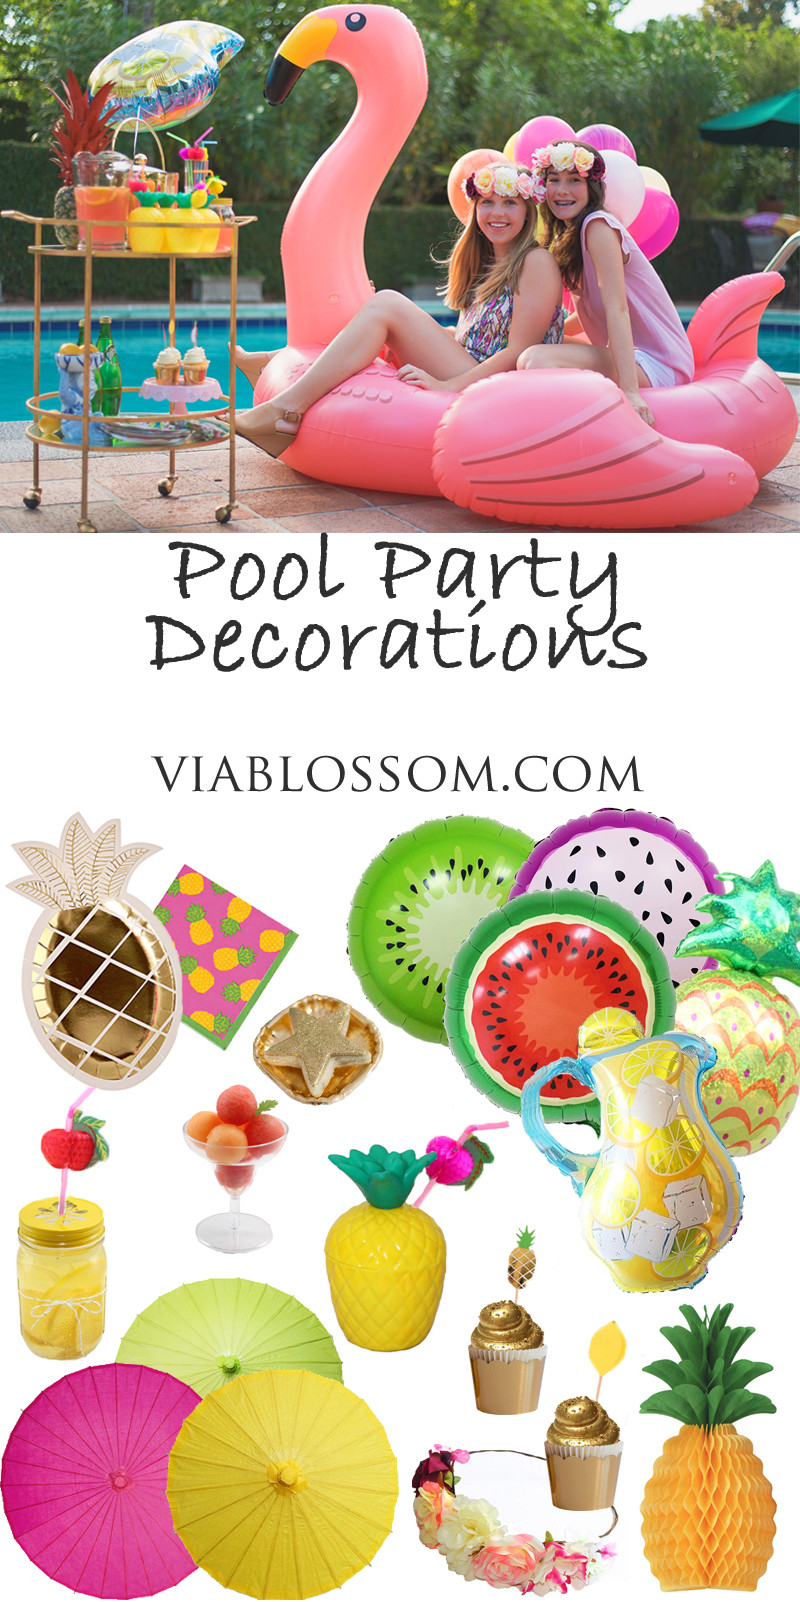 Pool Party Ideas
 Pool Party Ideas Via Blossom